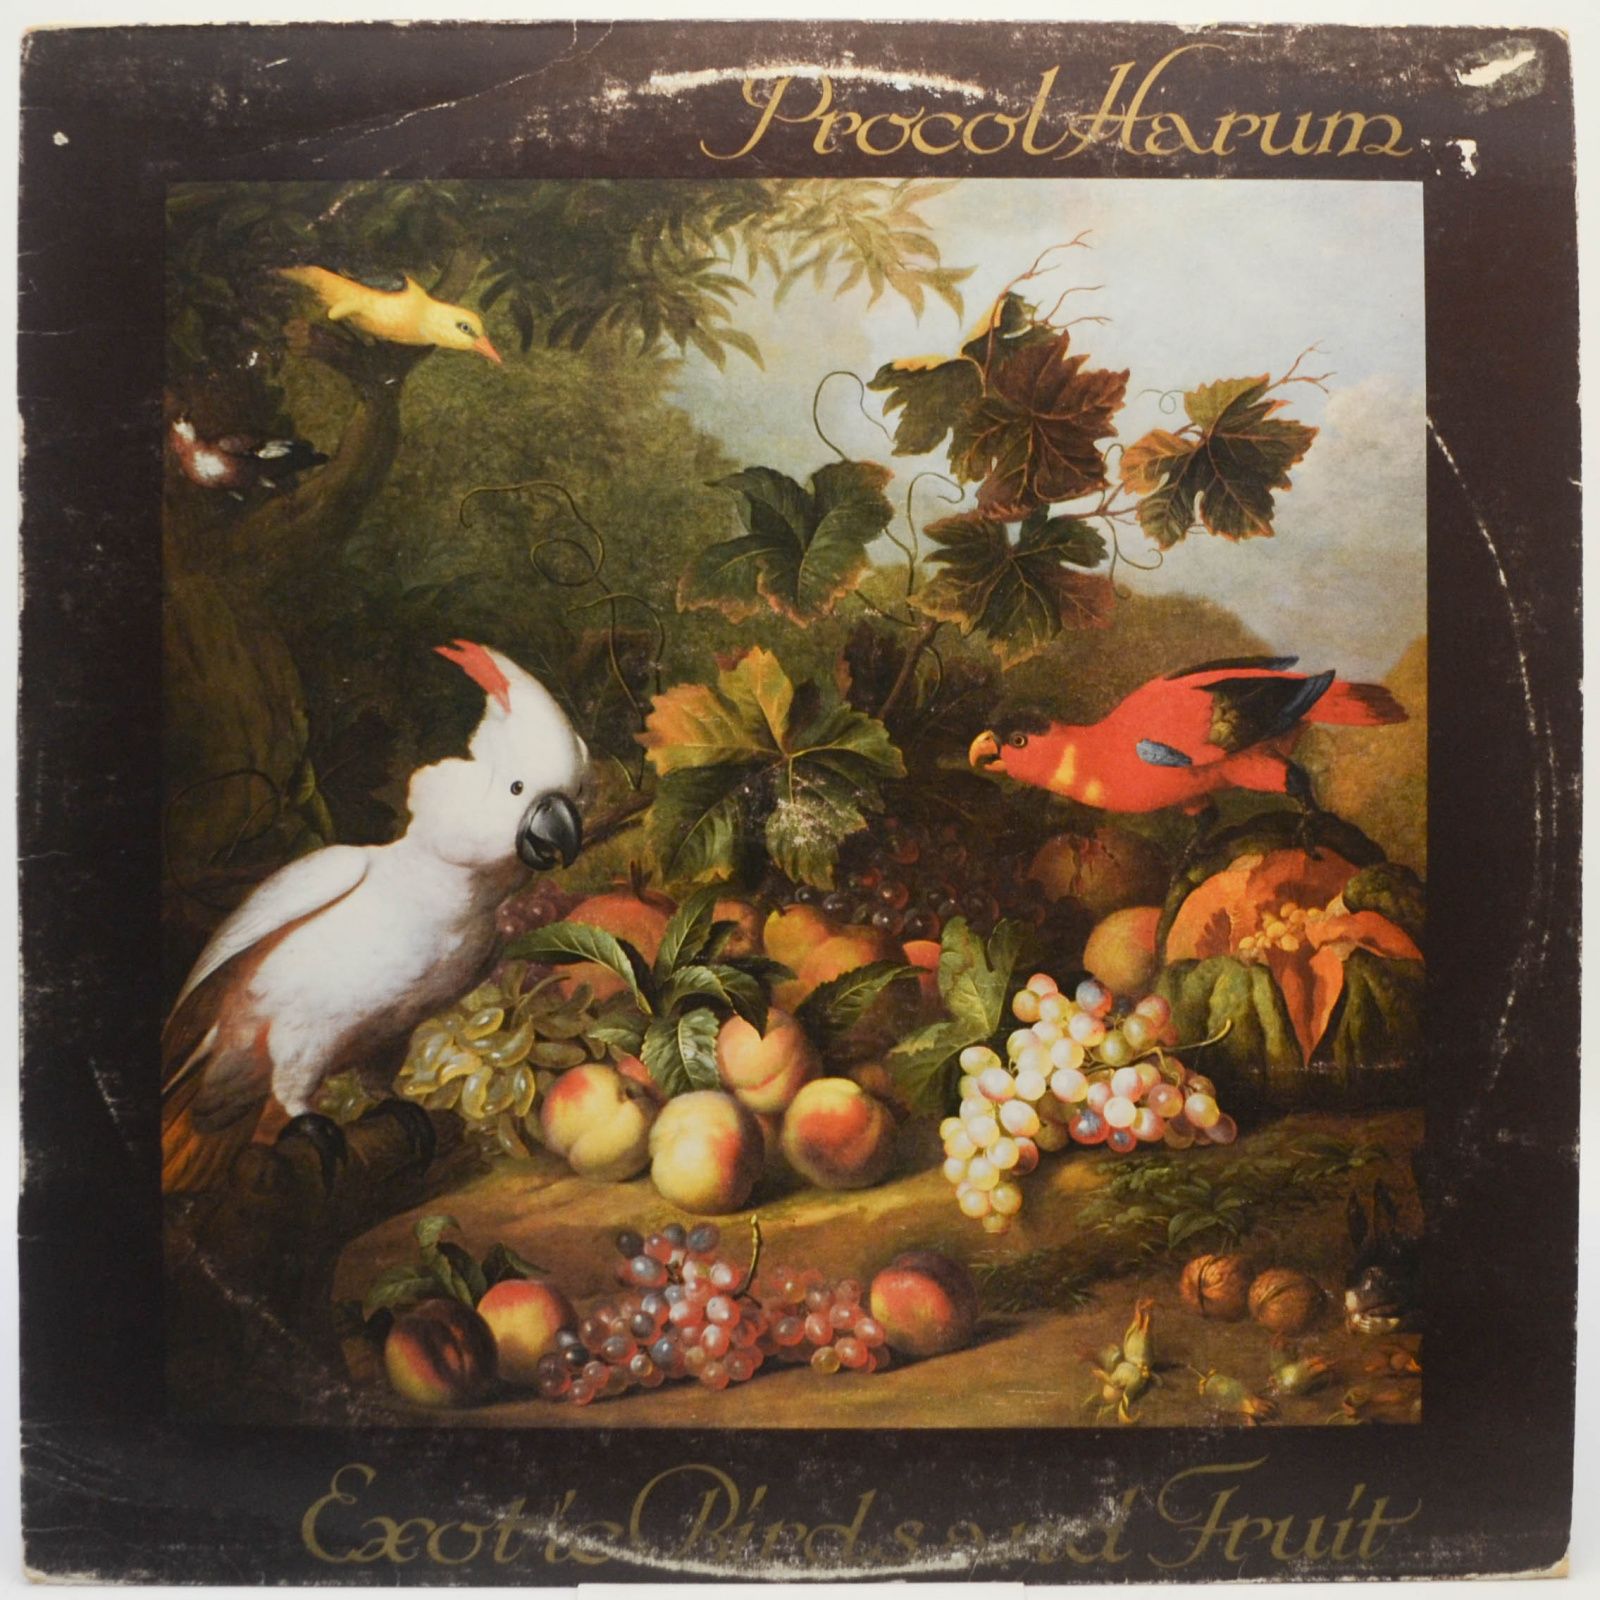 Procol Harum — Exotic Birds And Fruit, 1974